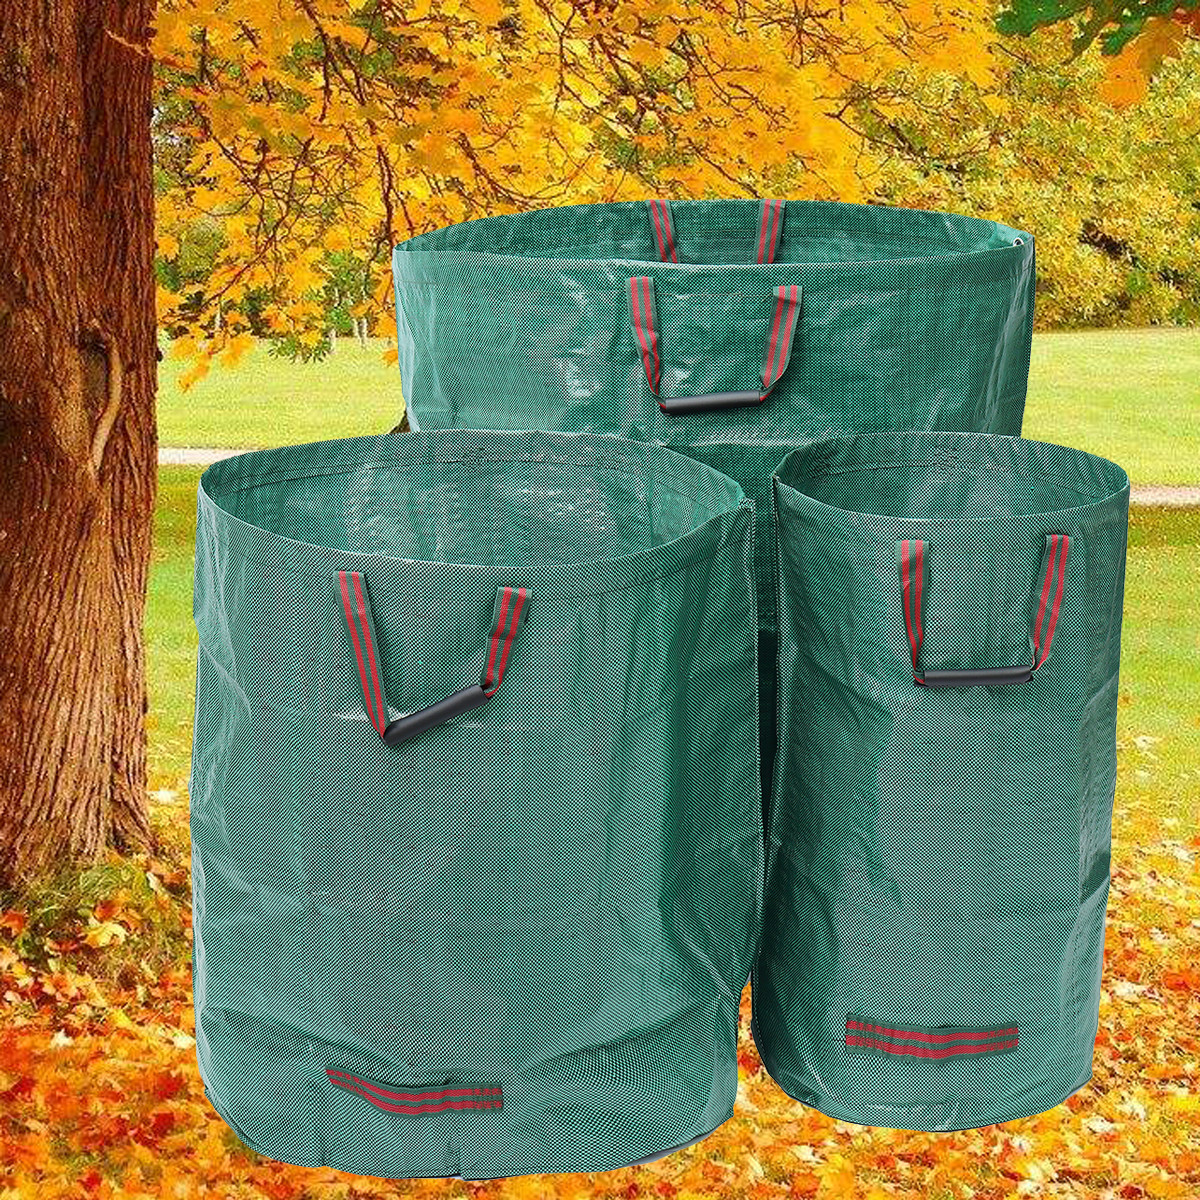 Strong-Garden-Bag-Waste-Refuse-Rubbish-Grass-Sack-Reusable-Heavy-Duty-Large-Trash-Bag-1434320-1